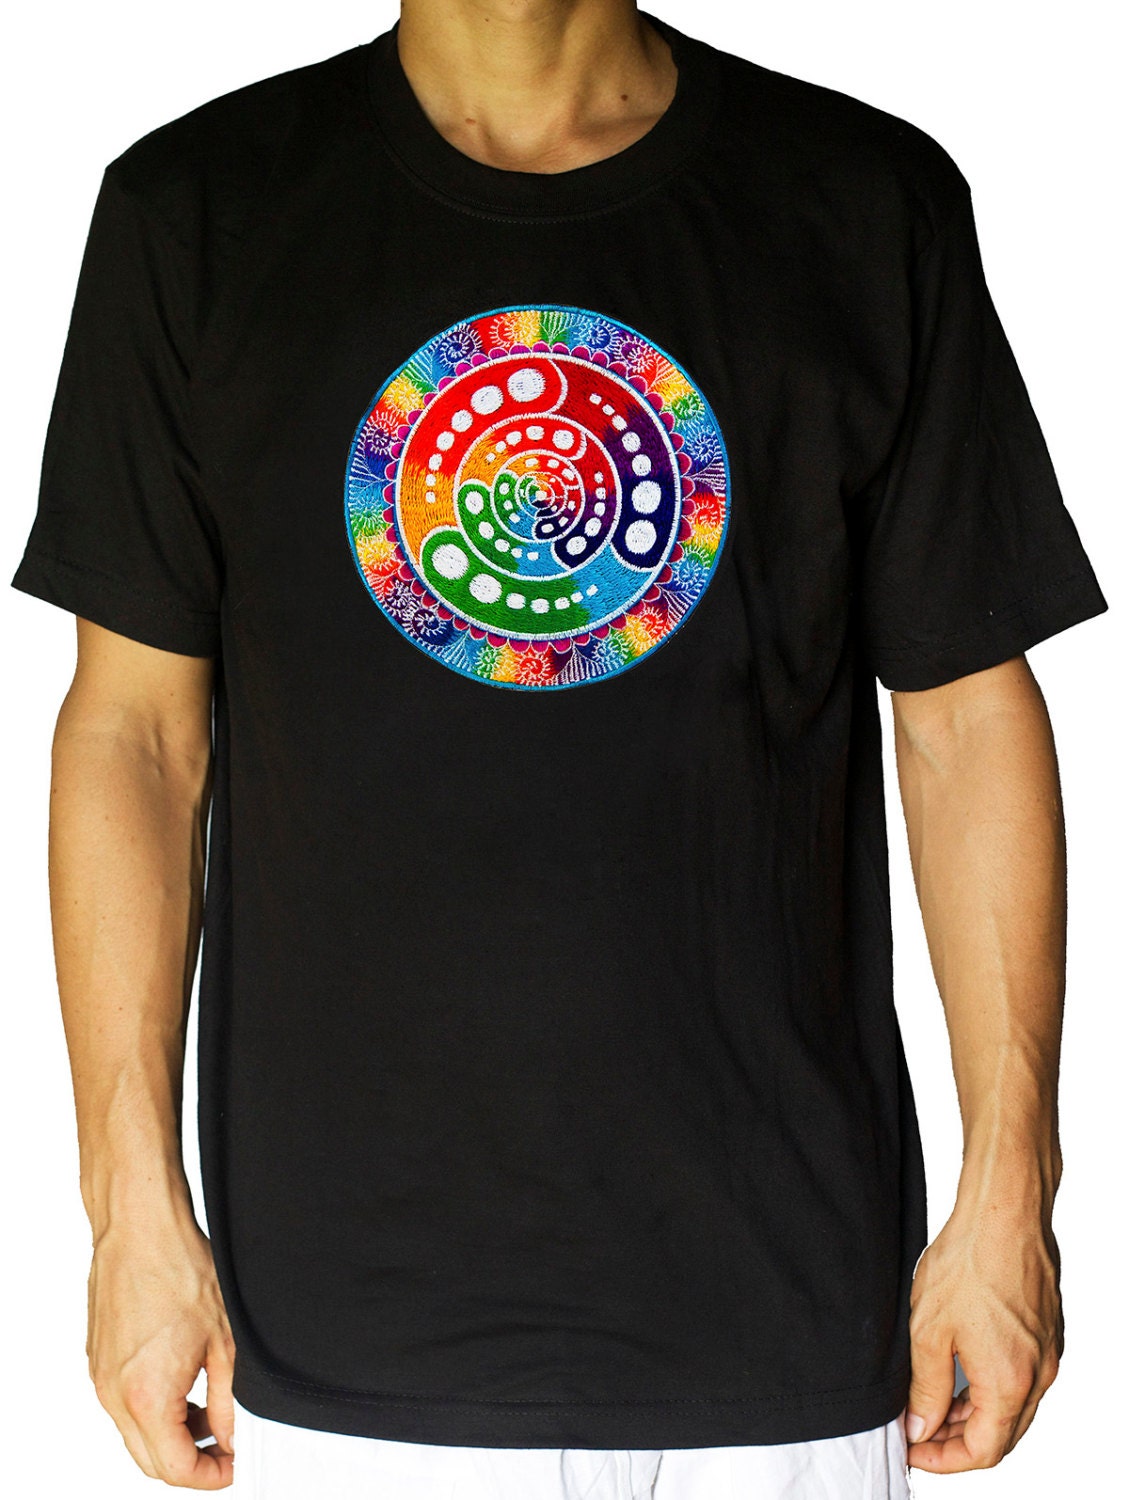 Attributes Shirt rainbow fractal mandala blacklight handmade embroidery no print goa t-shirt